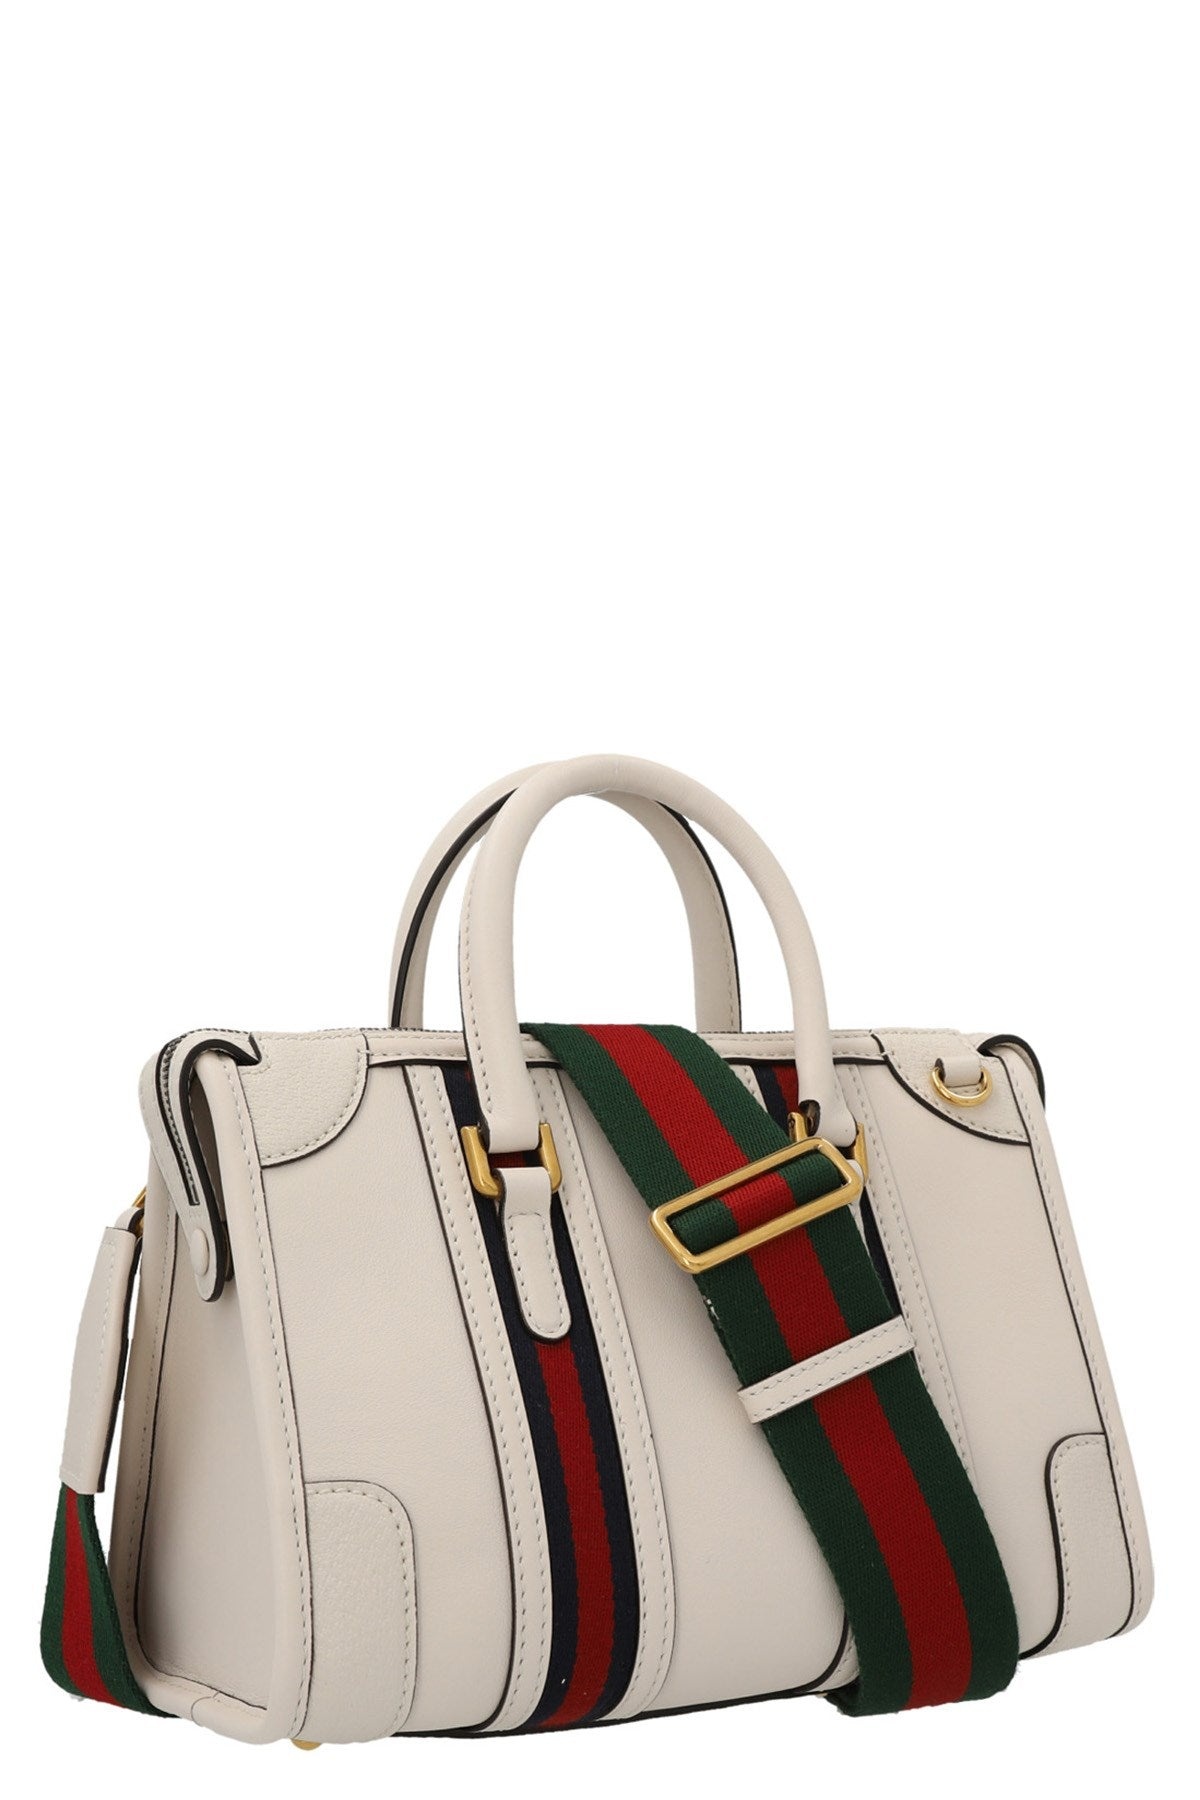 Gucci Women 'Double G' Small Handbag - 2